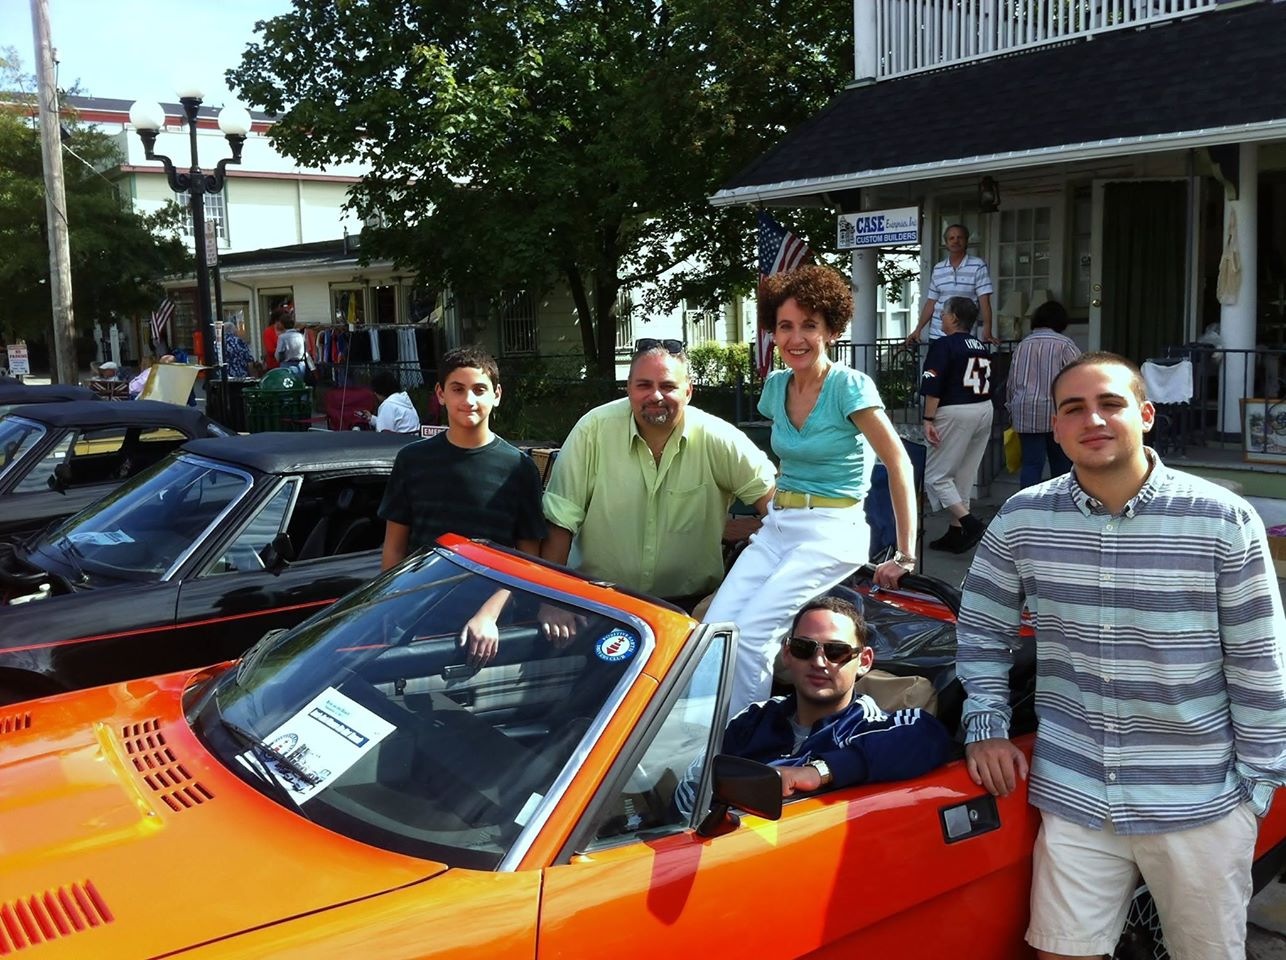 group of people sitting/around orange car